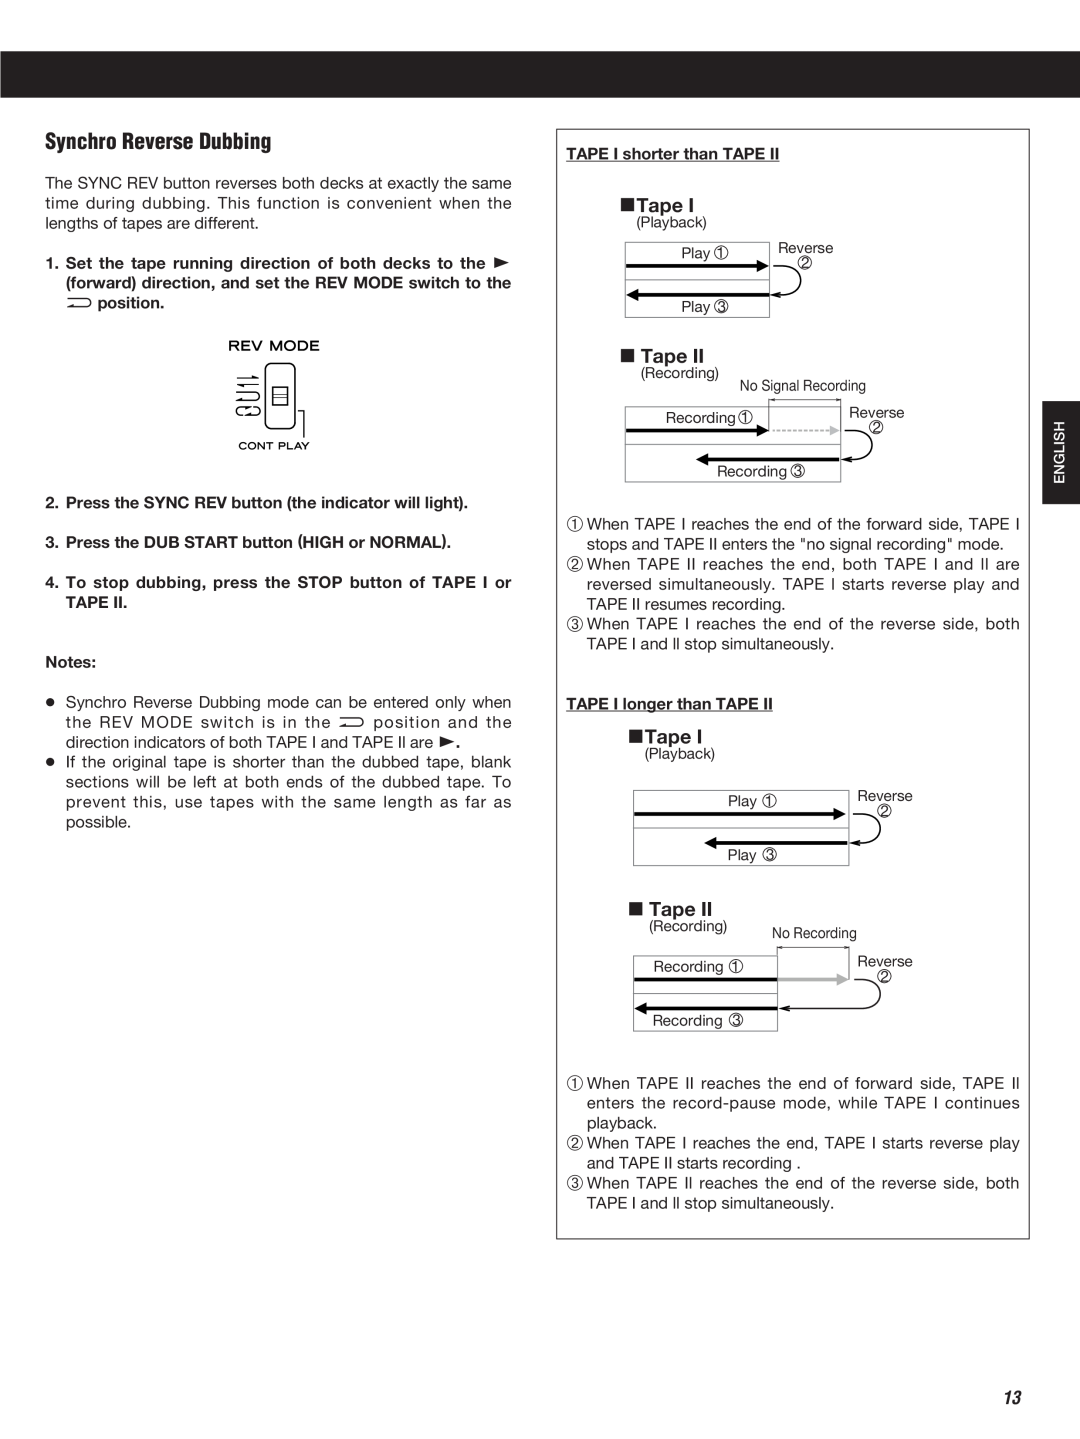 Teac W-860R owner manual Synchro Reverse Dubbing, Tape 